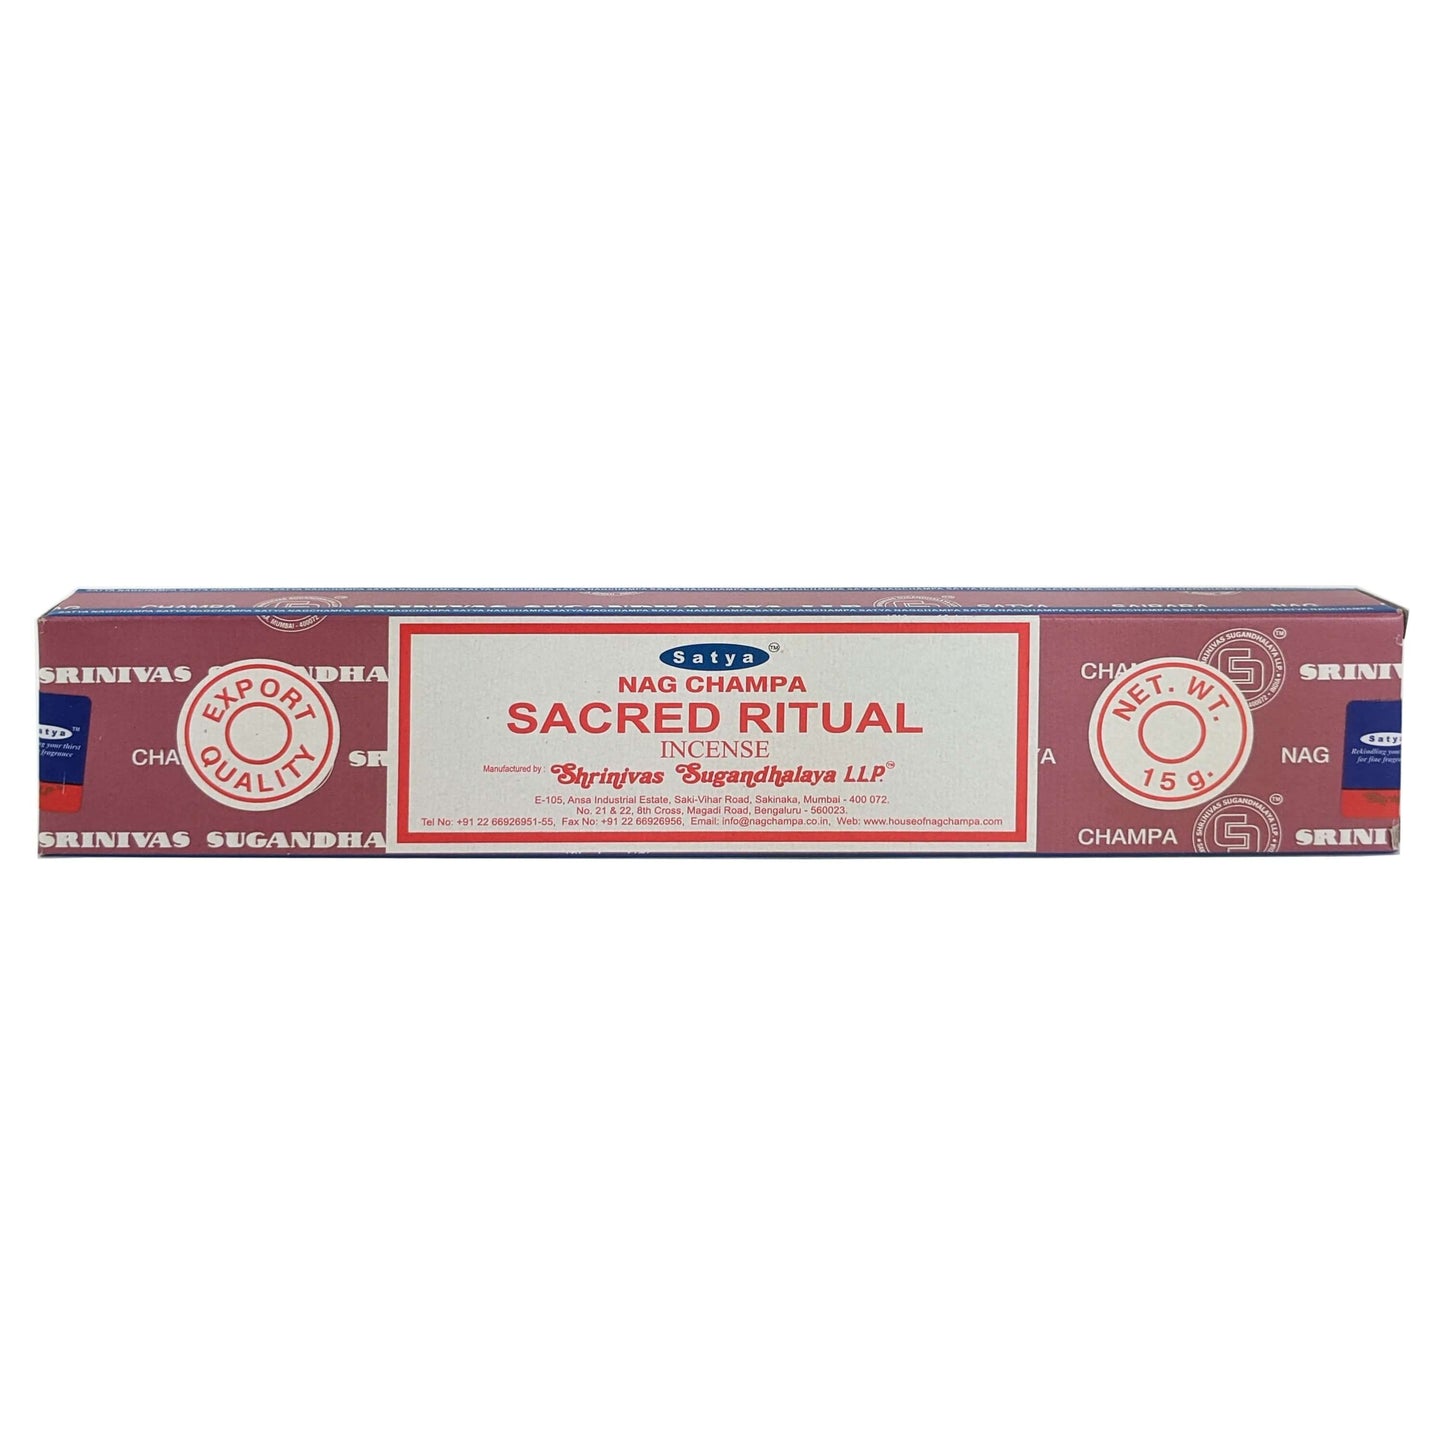 Satya Nag Champa Sacred Ritual Incense Sticks, 15g Pack